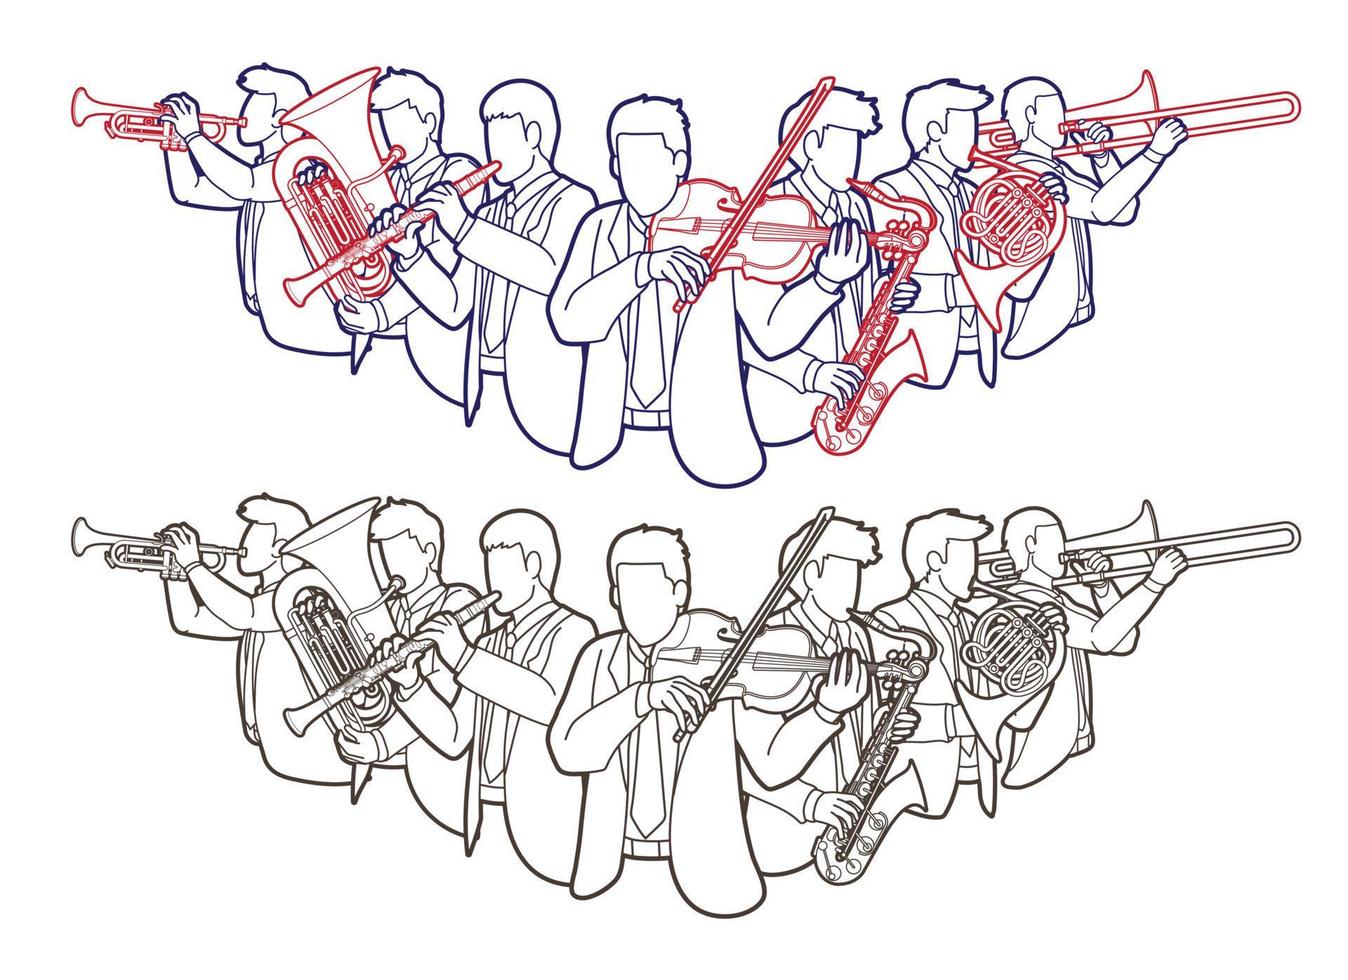 esquema grupo de músicos de orquesta instrumento músico vector